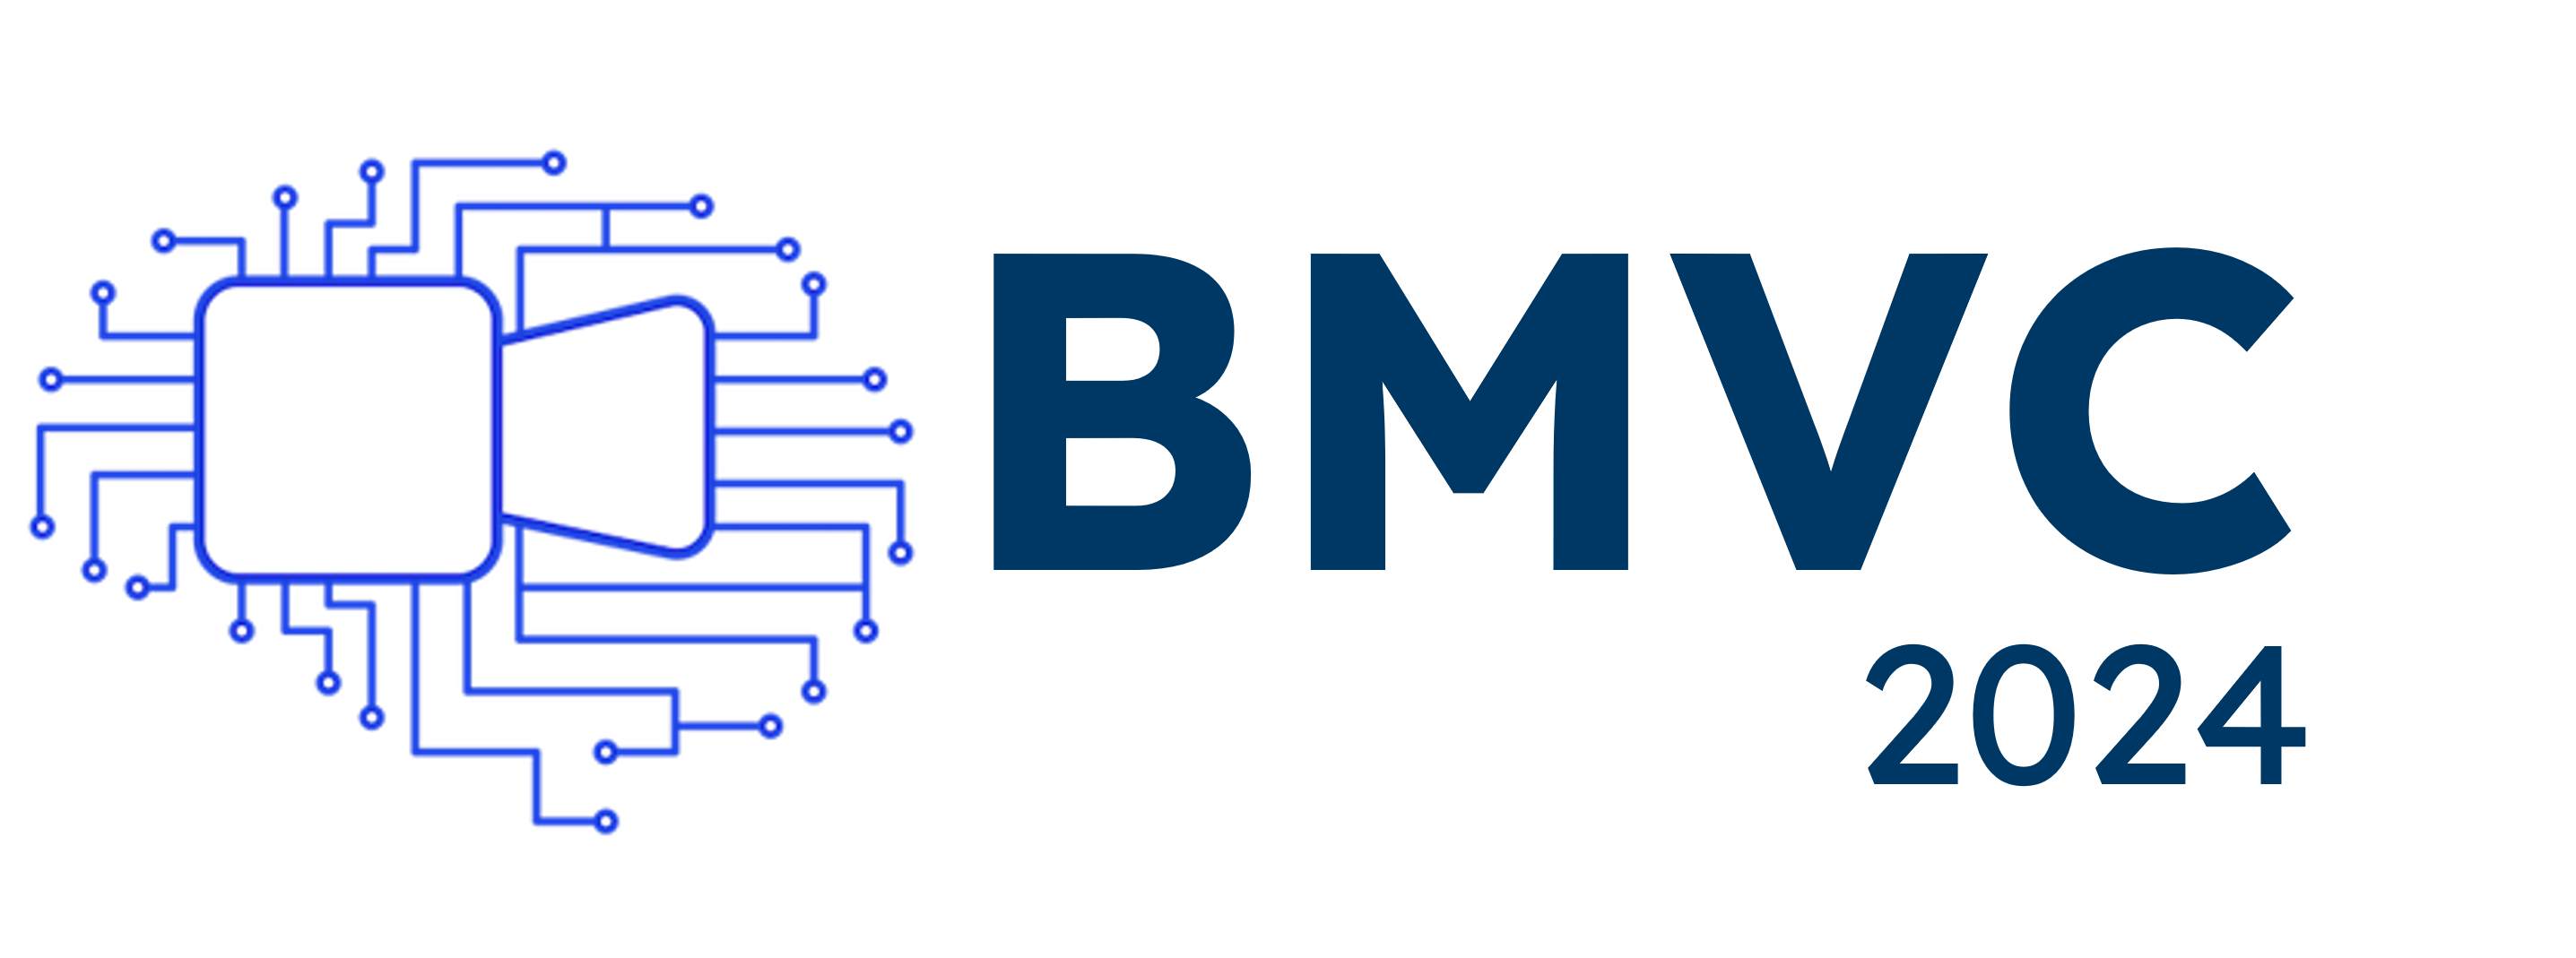 BMVC 2024 Logo